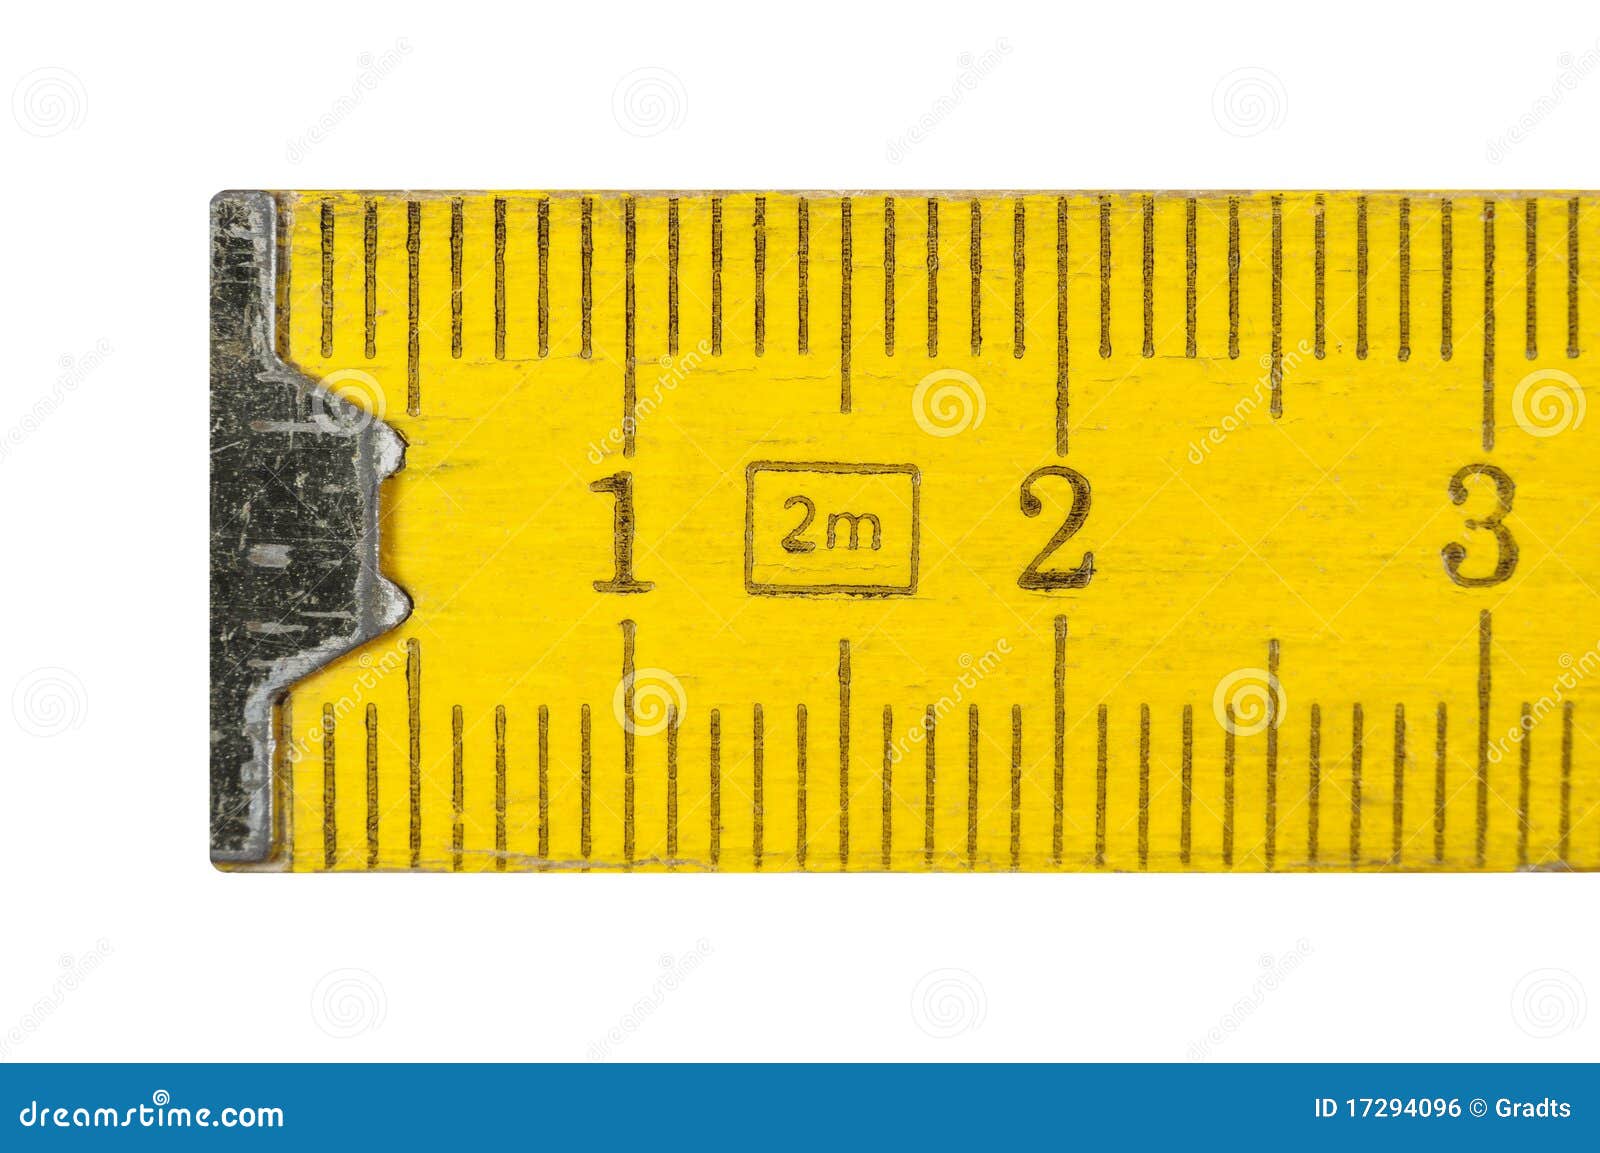 Folding meter stick stock photo. Image of tape, stick - 17294096